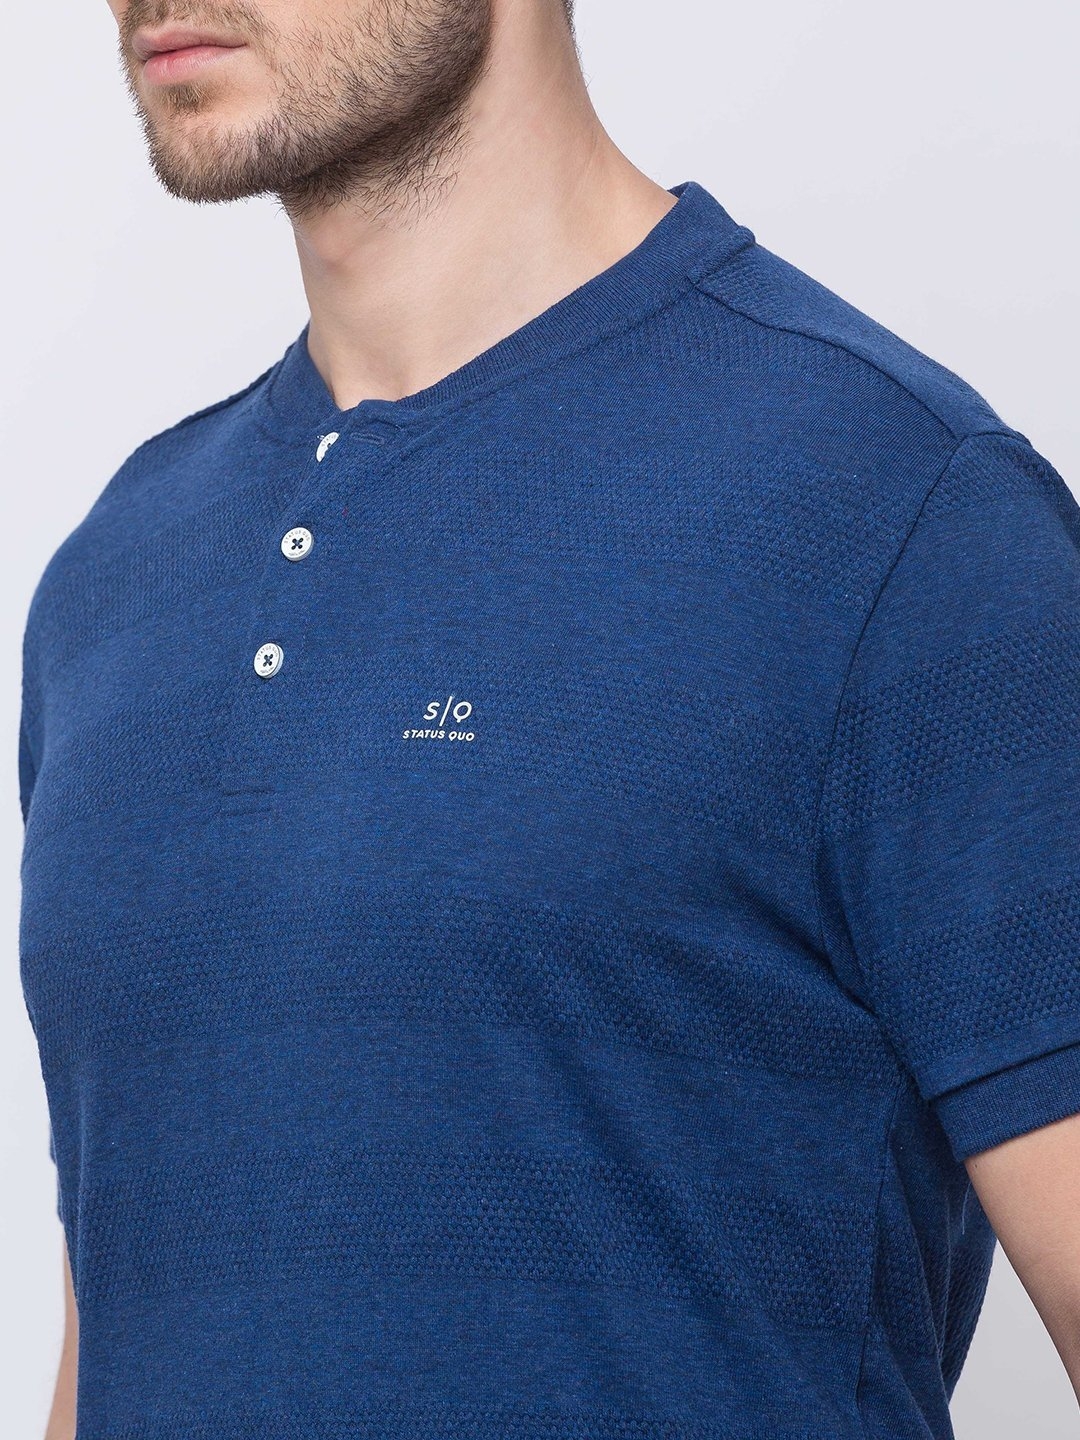 Status Quo | Men's Blue Cotton Melange Textured Regular T-Shirt 6